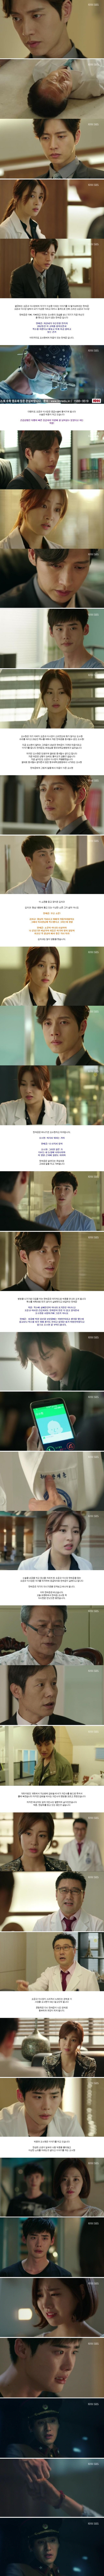 episode 19 captures for the Korean drama 'Doctor Stranger'